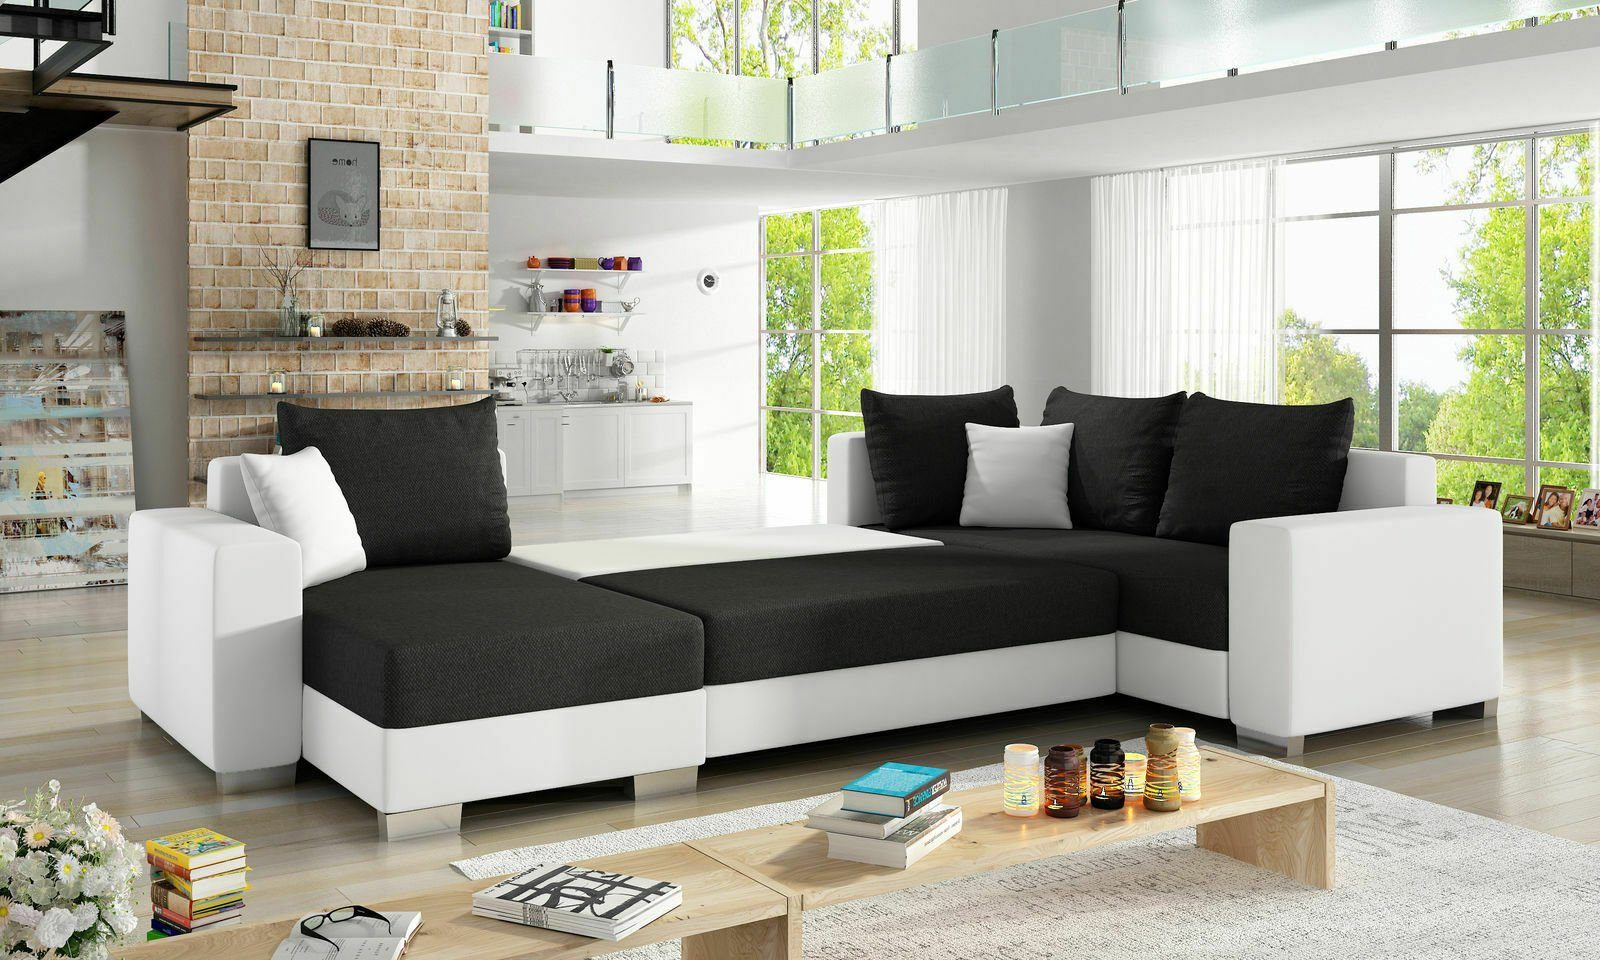 JVmoebel Ecksofa Design Ecksofa Sofa Schlafsofa Bettfunktion Couch Polster Textil, Mit Bettfunktion Schwarz / Weiß